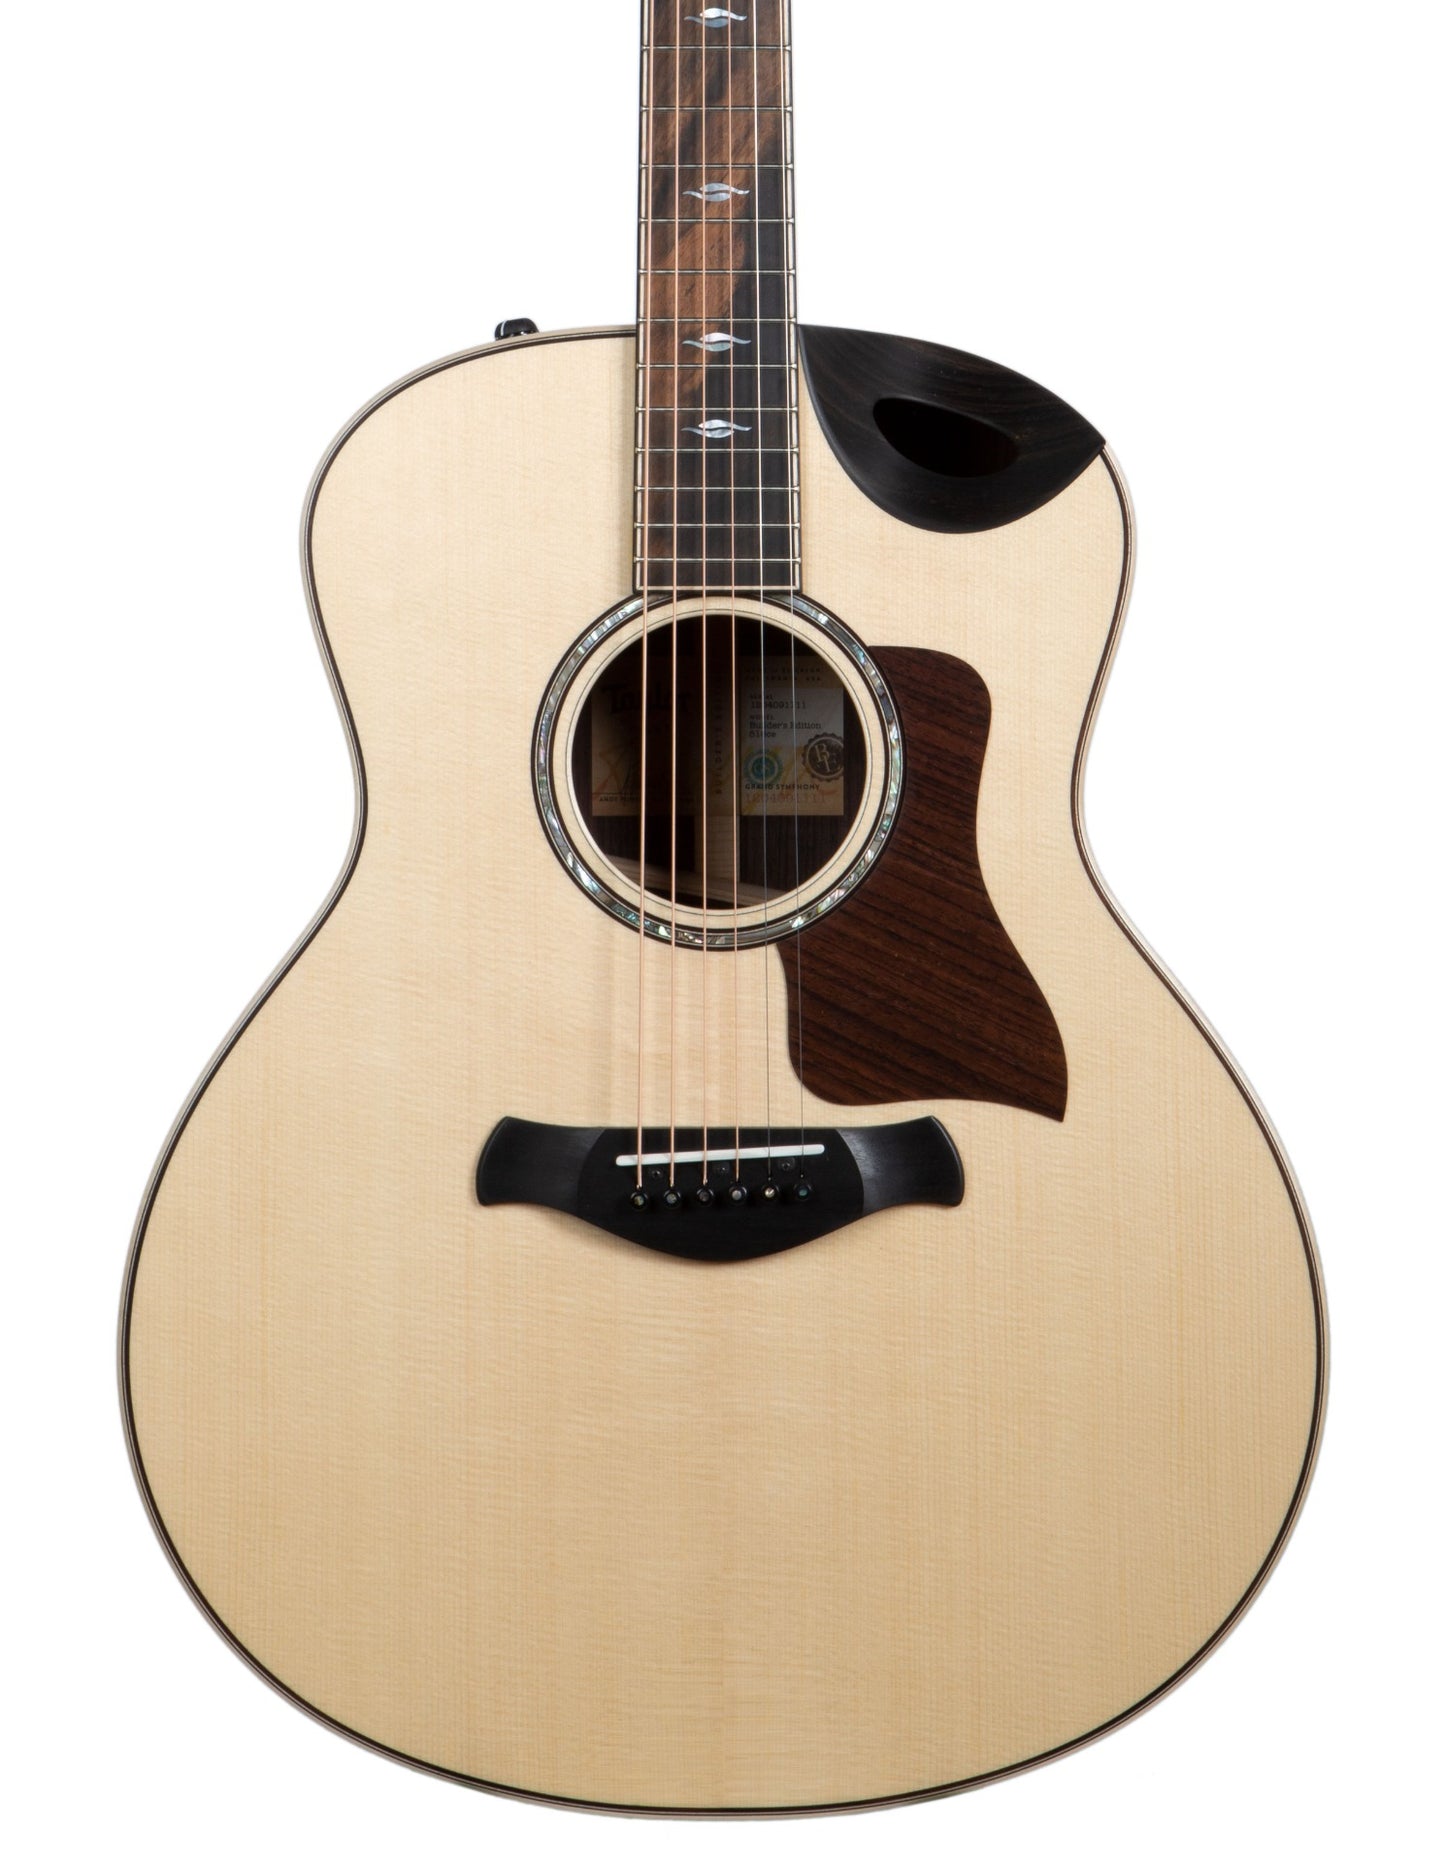 Taylor 816ce Builder’s Edition Grand Symphony Acoustic Electric Guitar